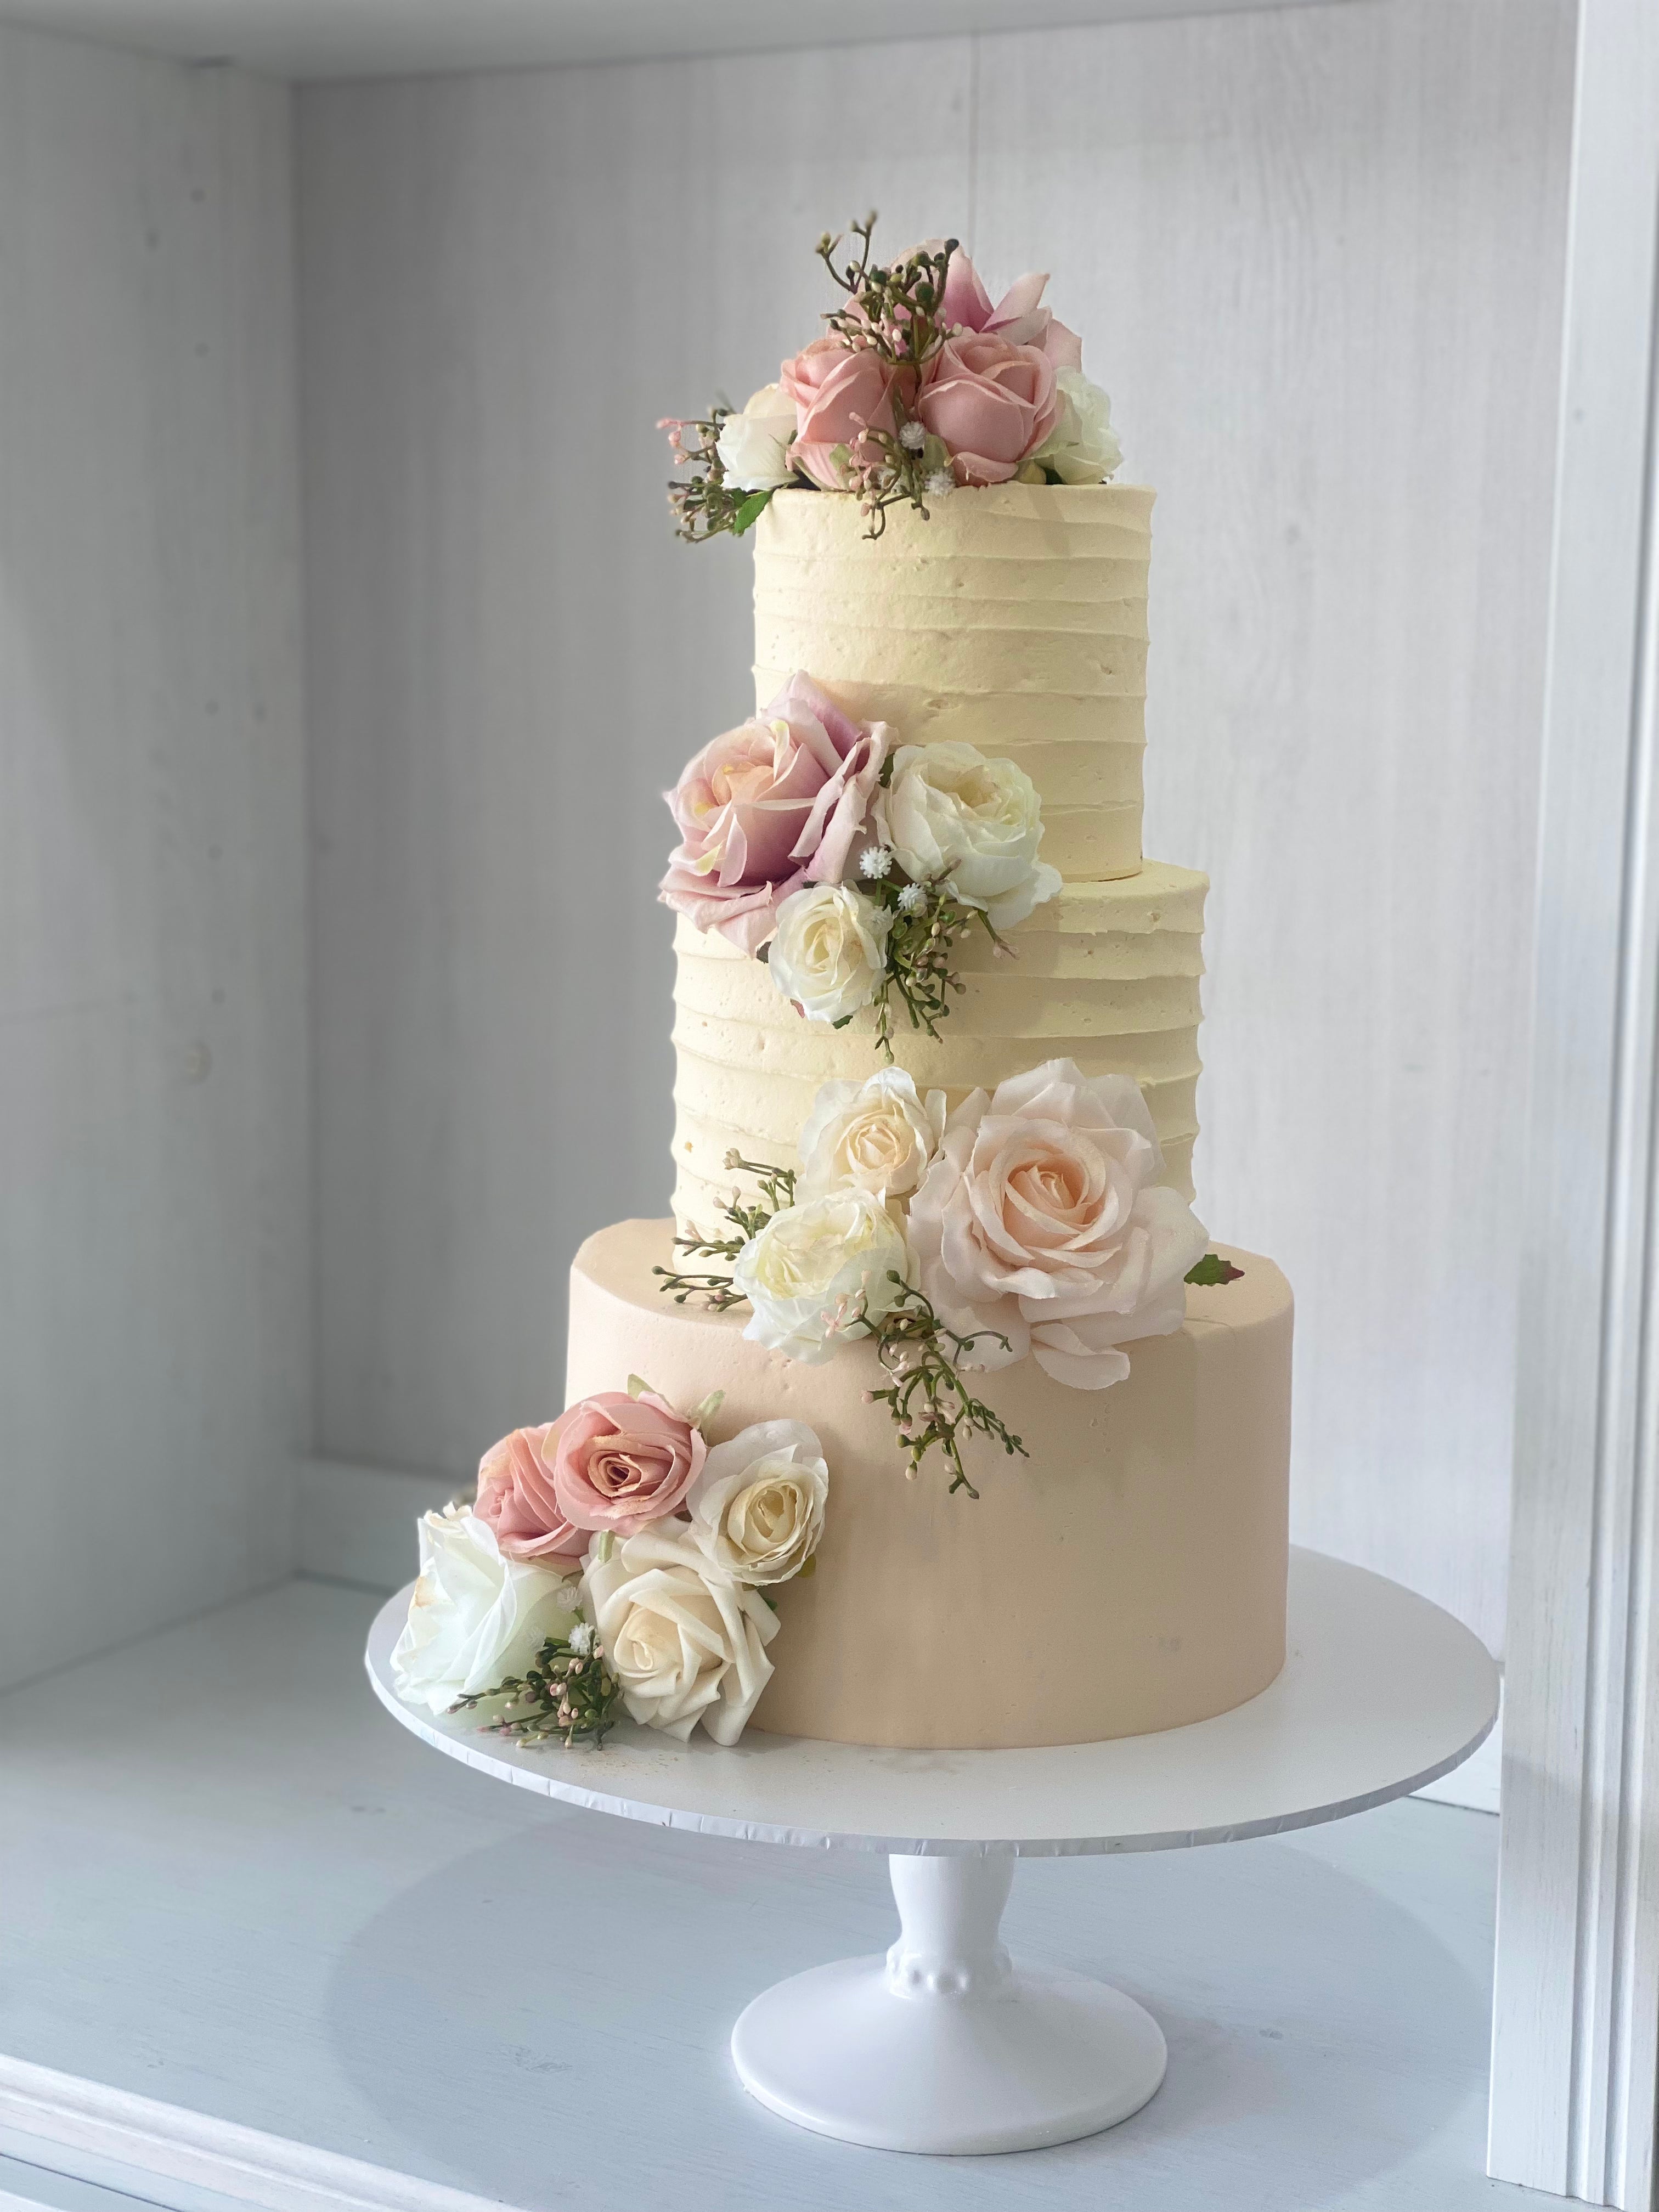 *3 tier- love story wedding cake